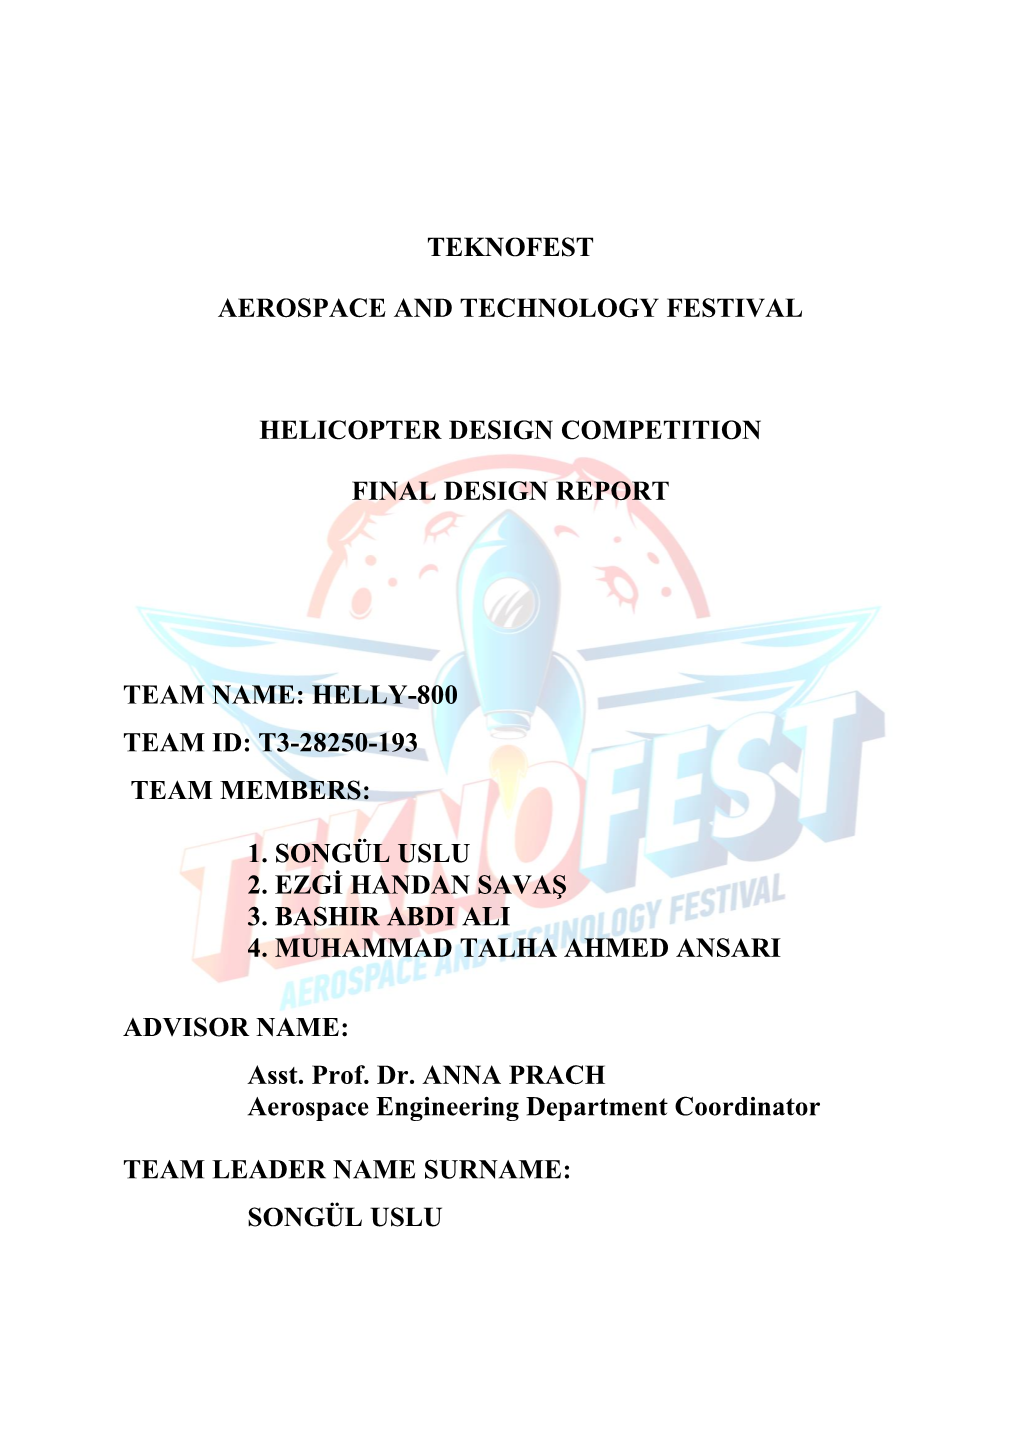 Teknofest Aerospace and Technology Festival